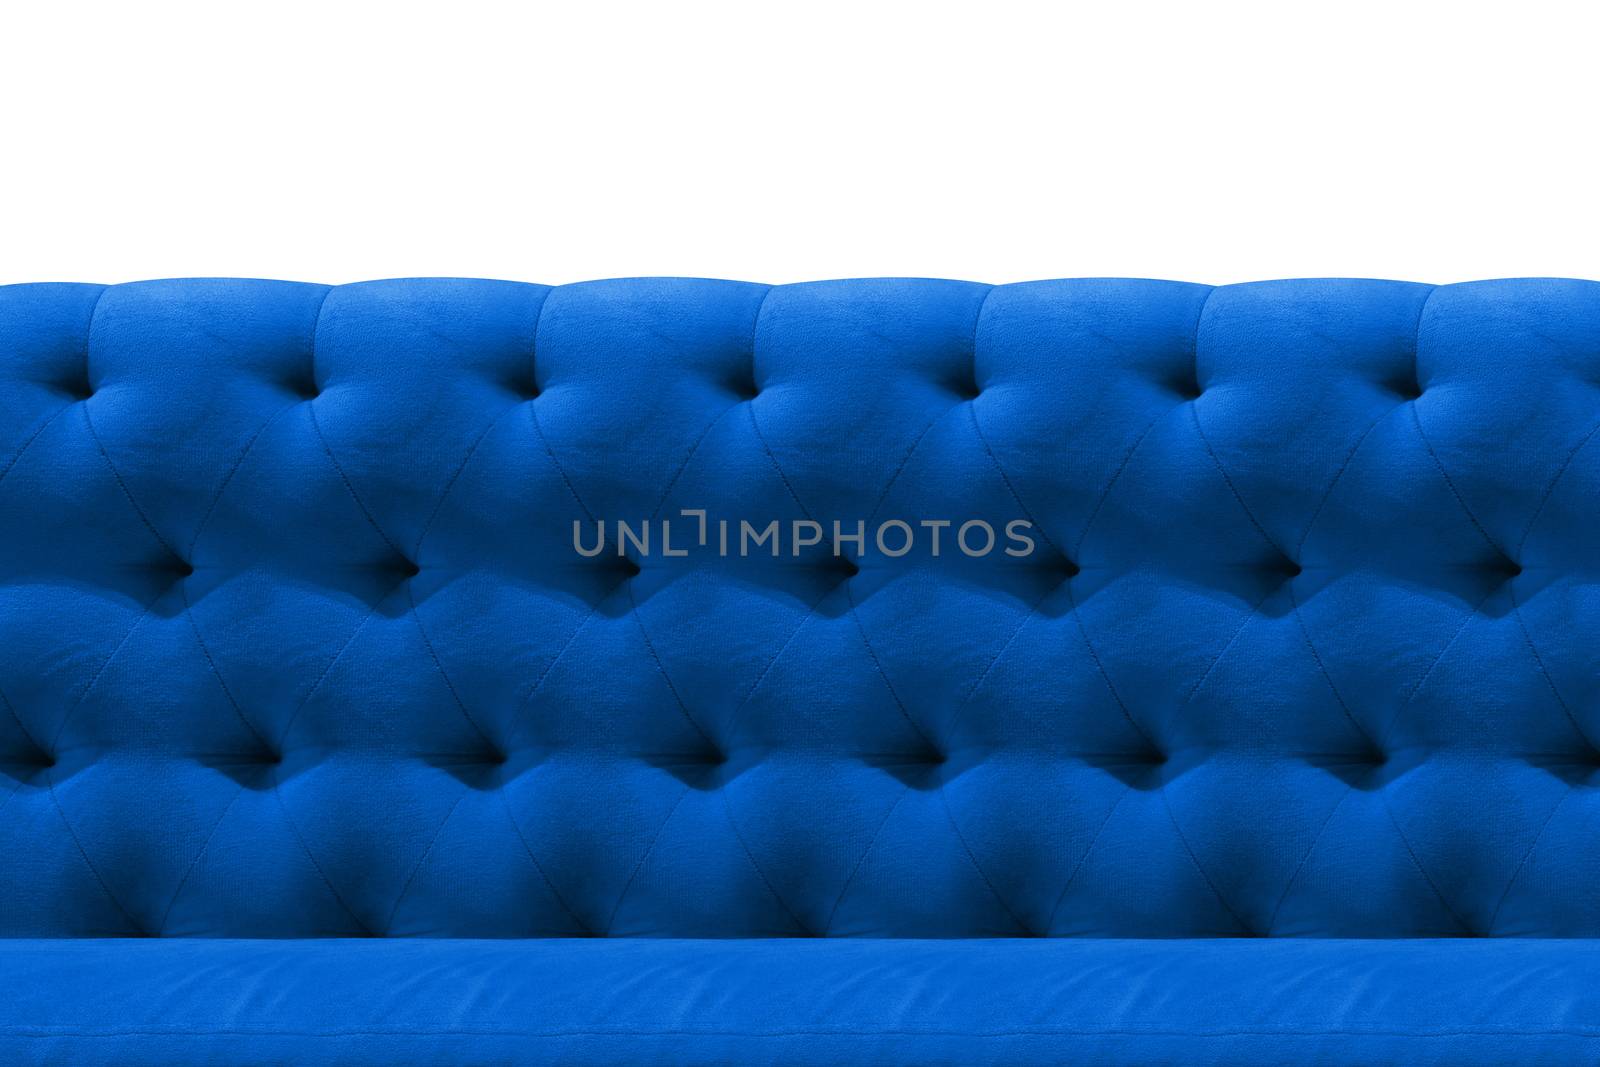 Luxury Dark Blue sofa velvet cushion close-up pattern background on white